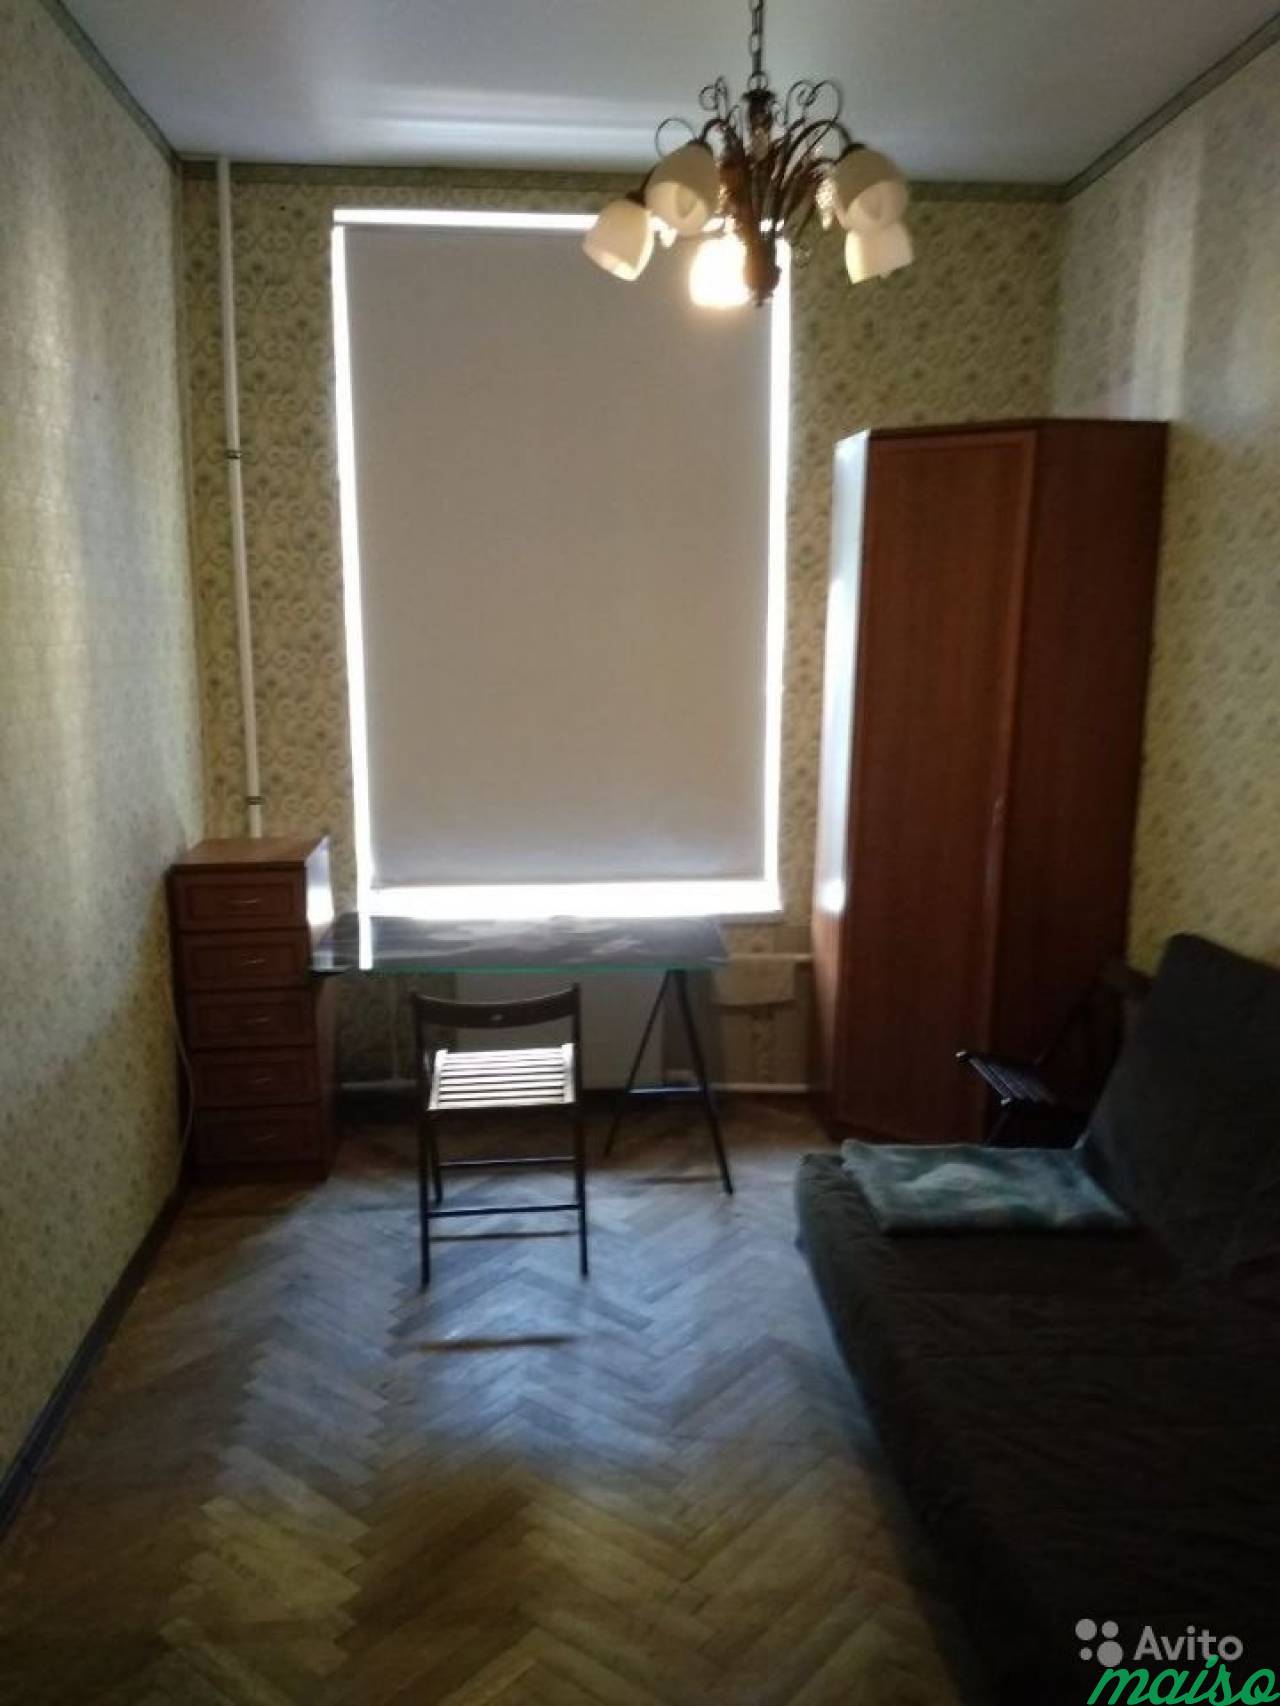 Комната 13 м² в 6-к, 3/5 эт. в Санкт-Петербурге. Фото 2